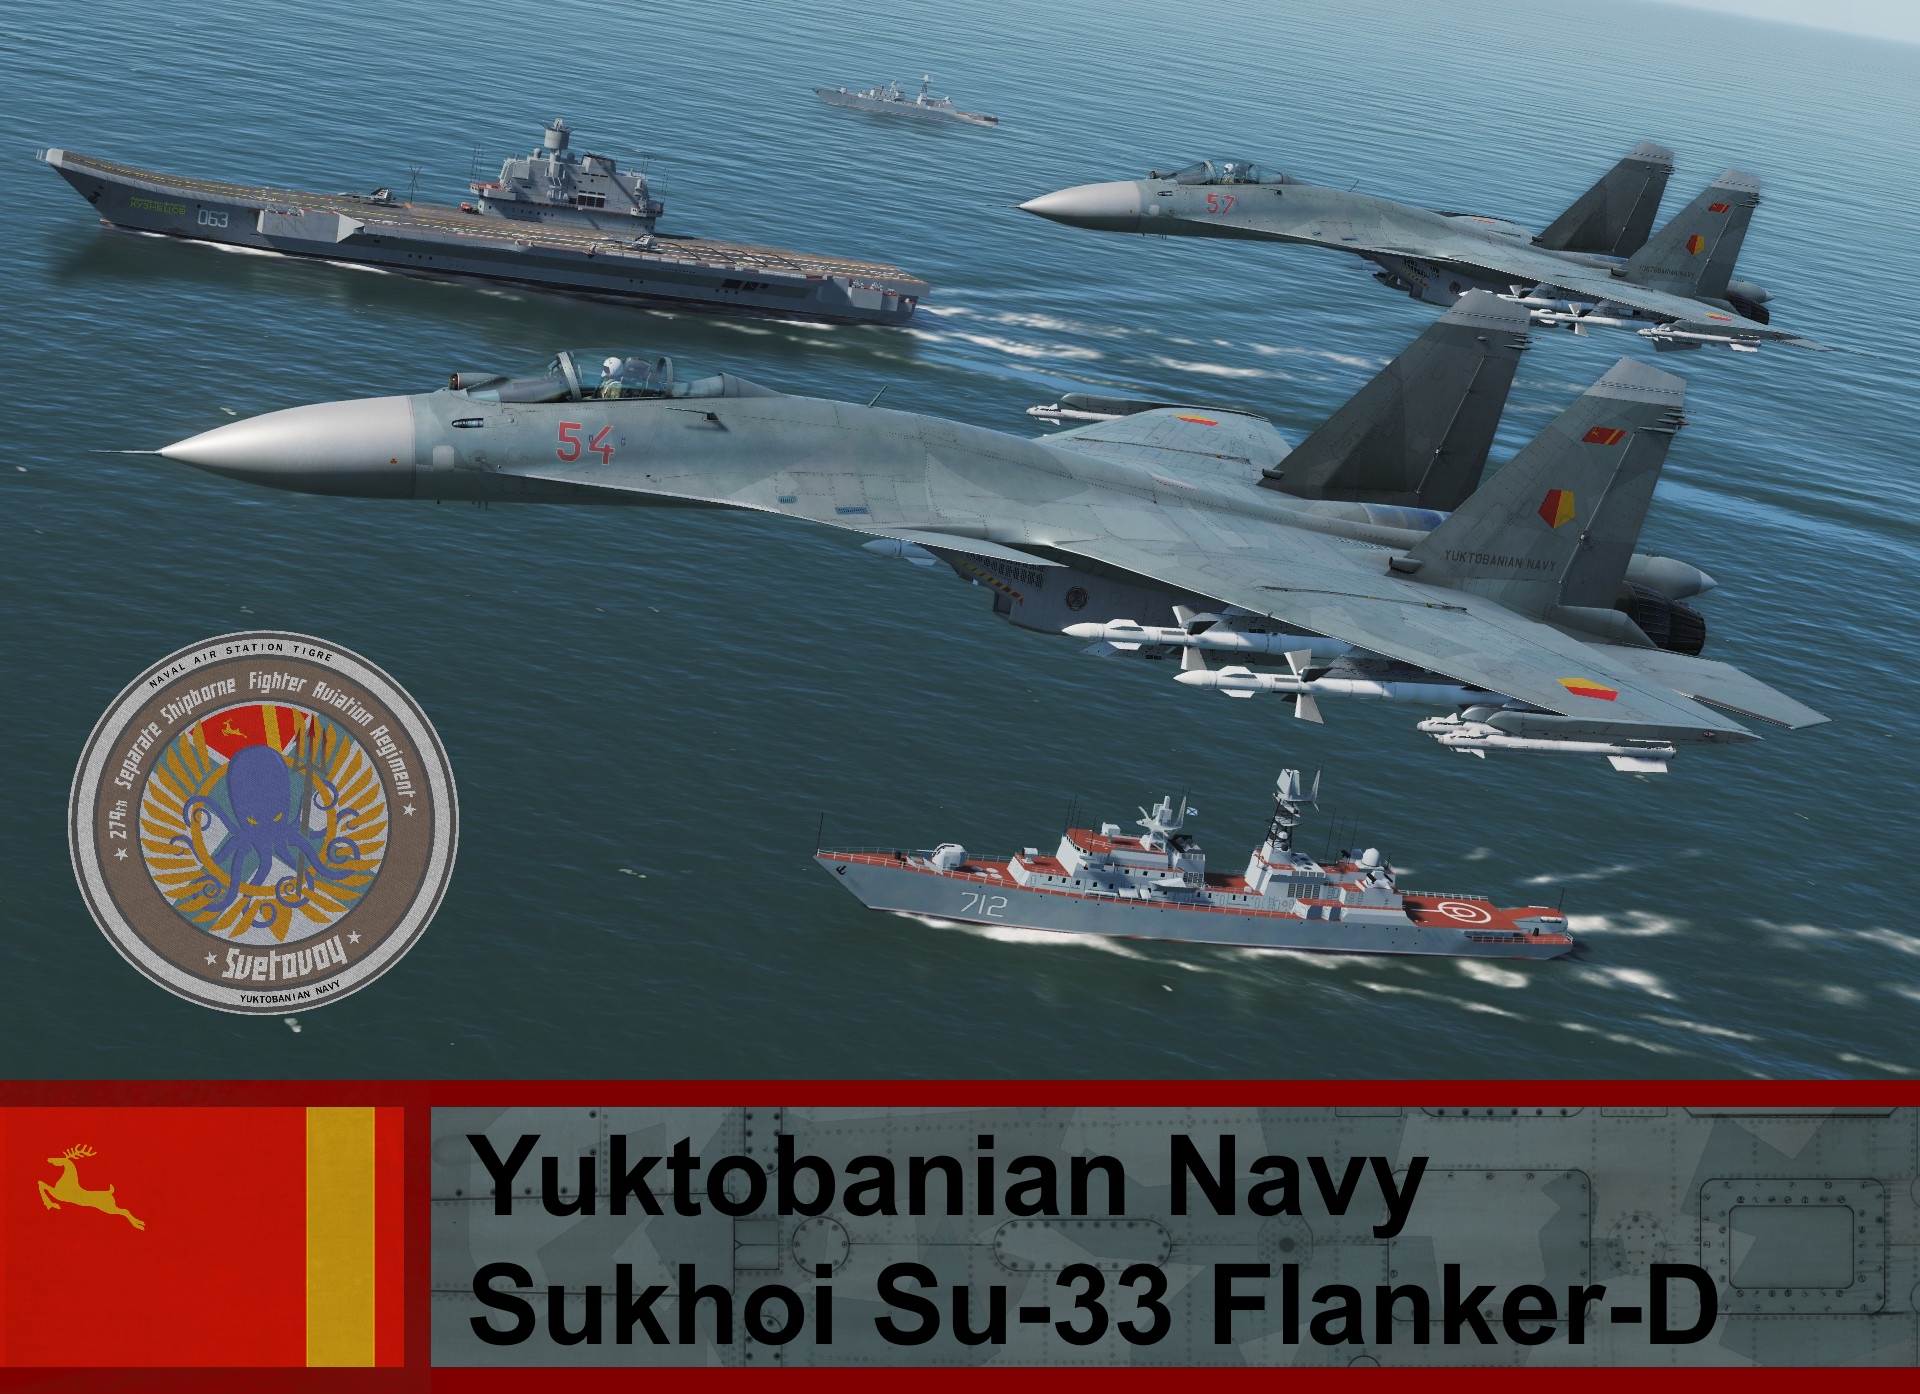 Yuktobanian Navy, Su-33 Flanker-D - Ace Combat 5 (279th SSFAR)